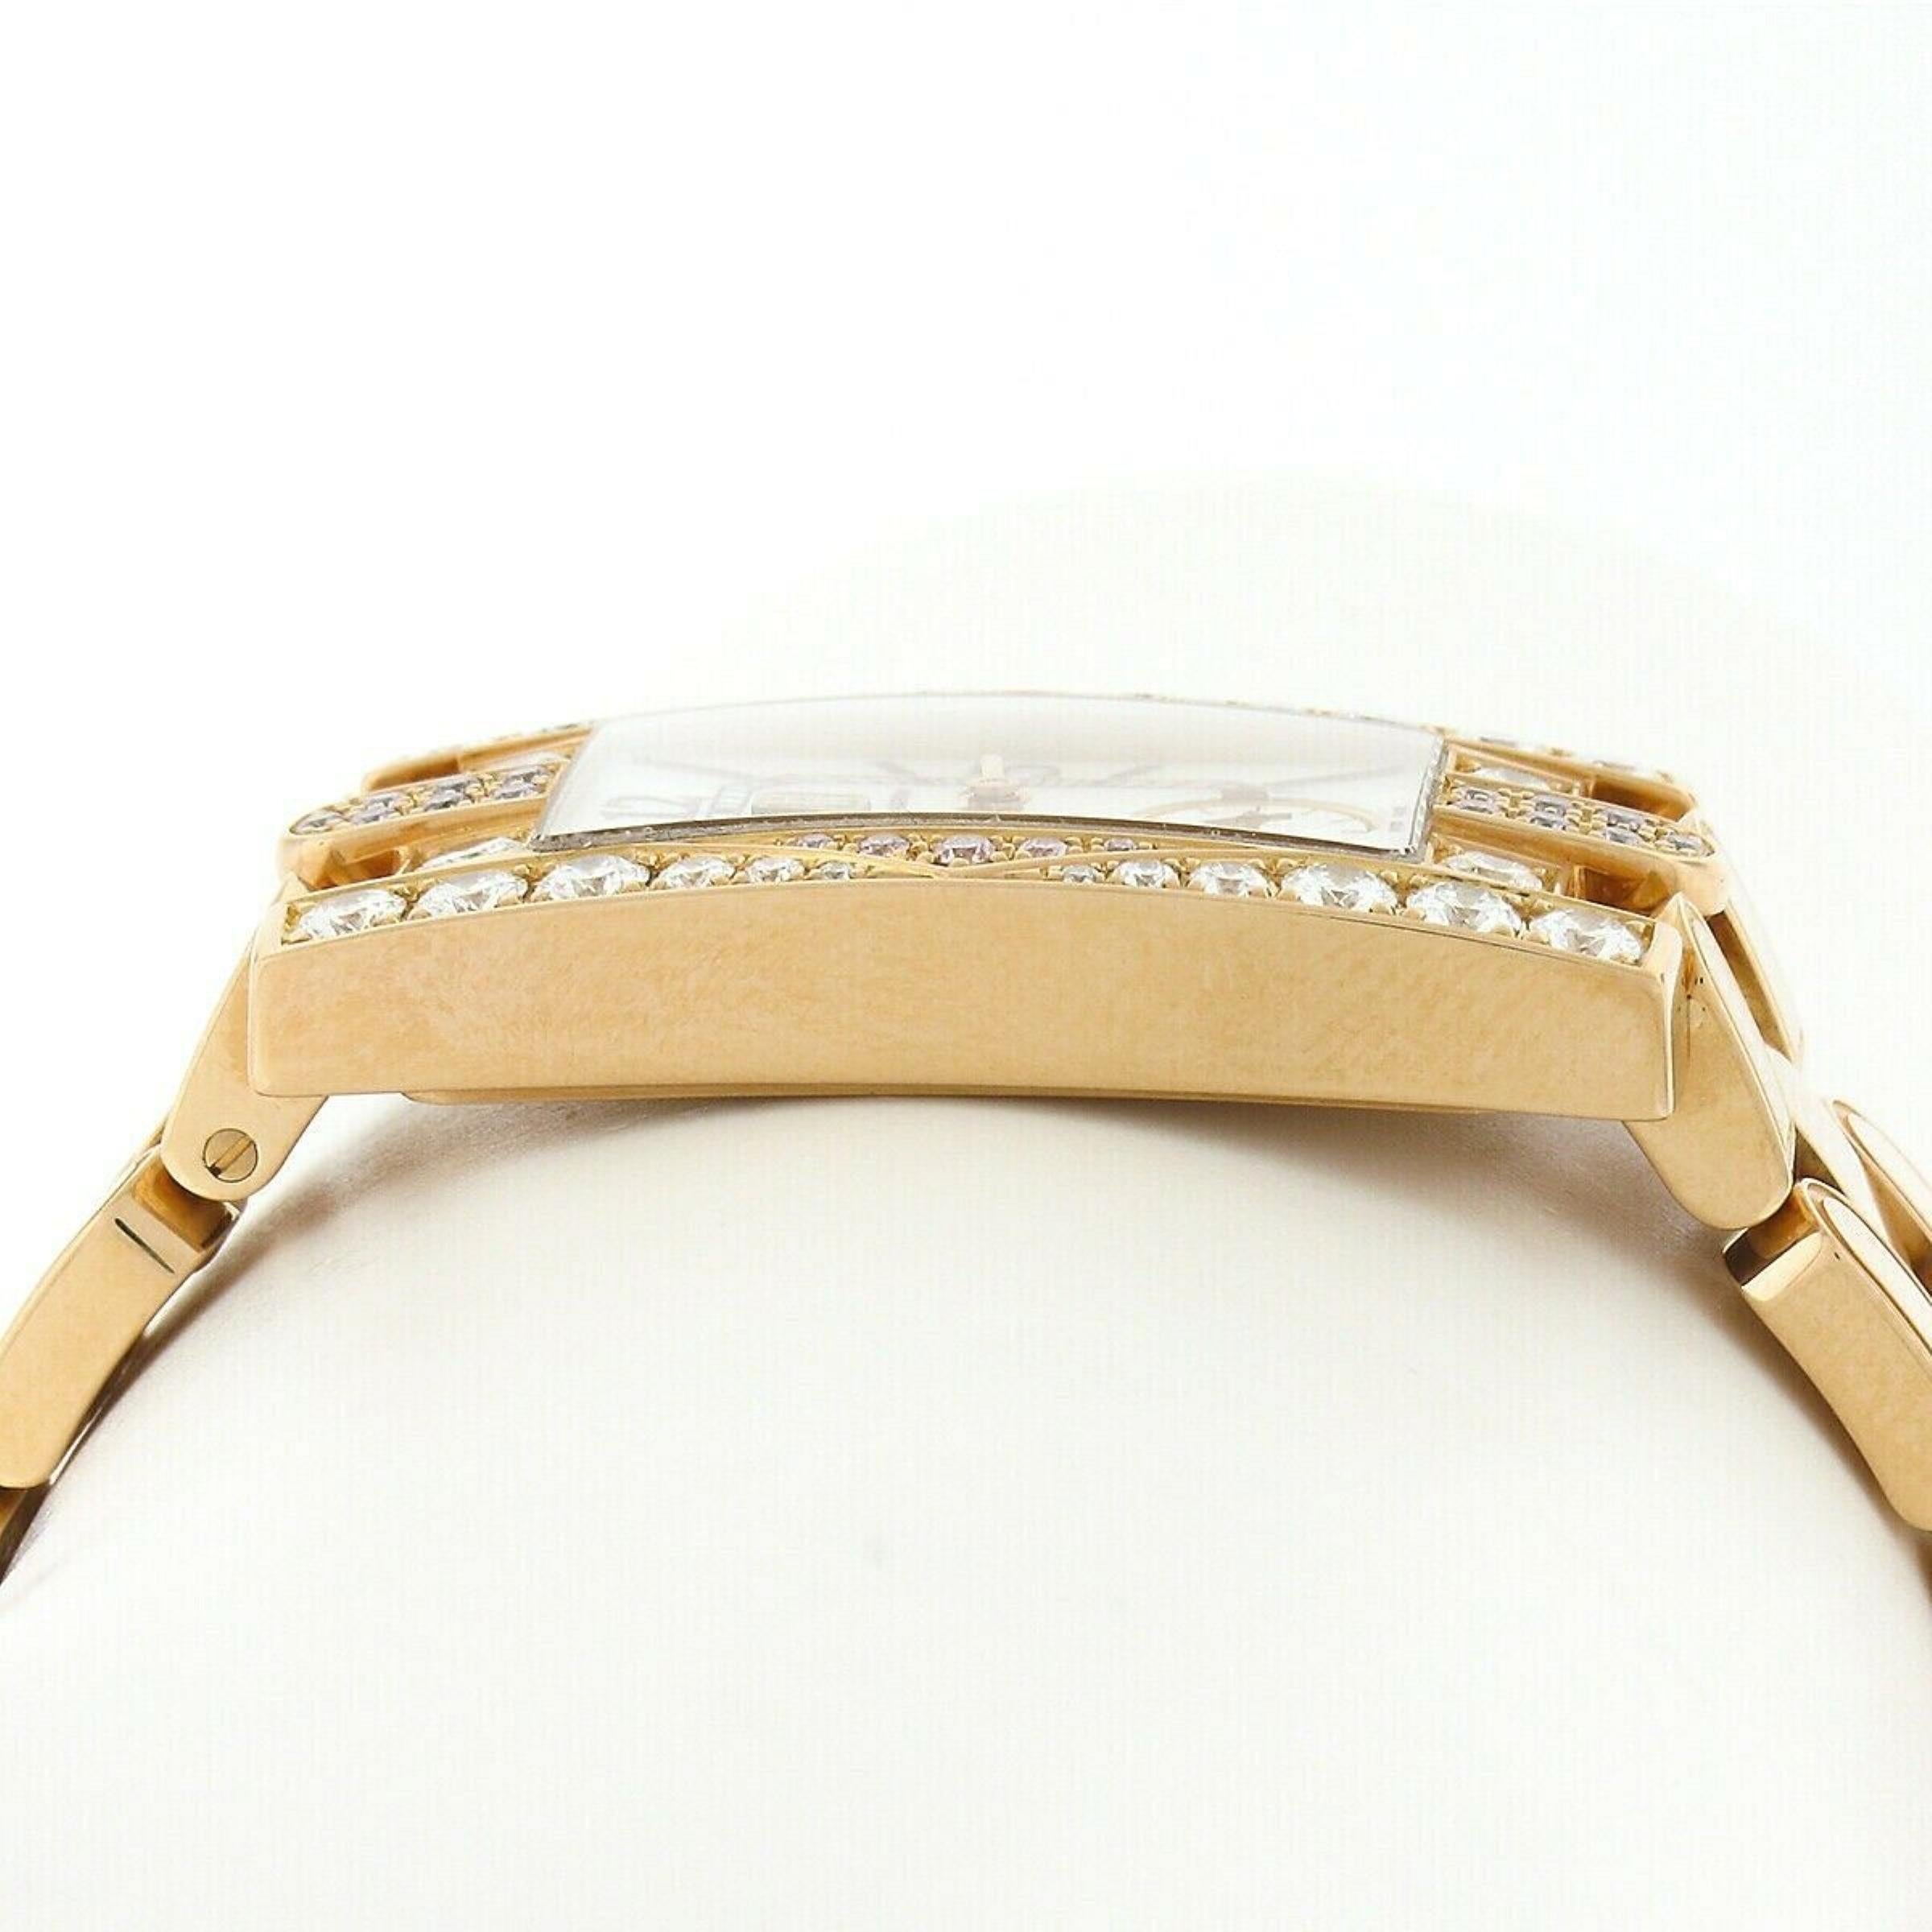 Women's Harry Winston Avenue Classic 18k Rose Gold Pink White Diamond Watch Ref. 310LQR